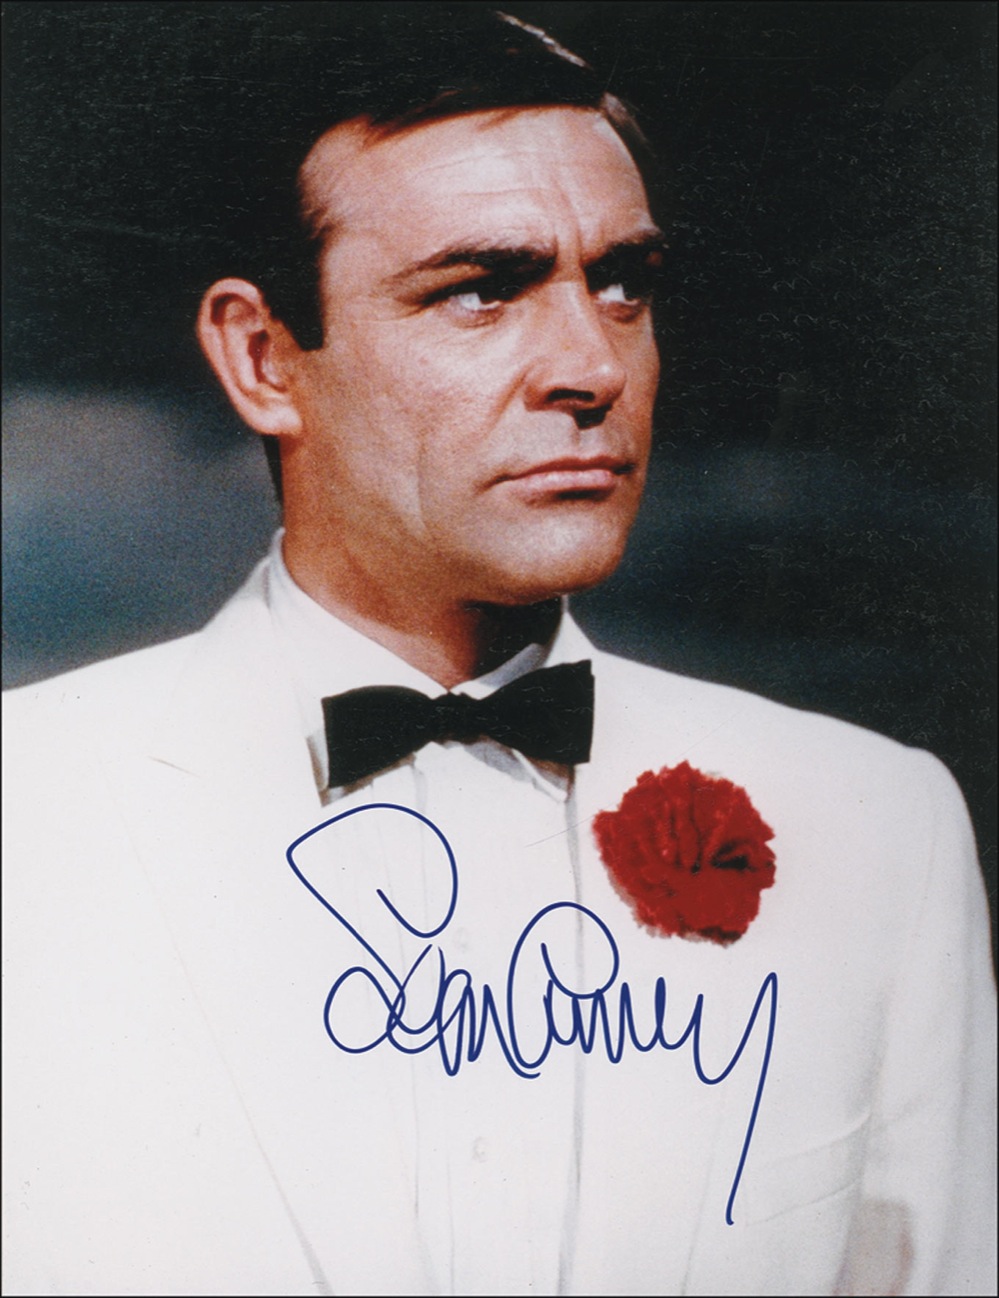 Lot #1029 James Bond: Sean Connery